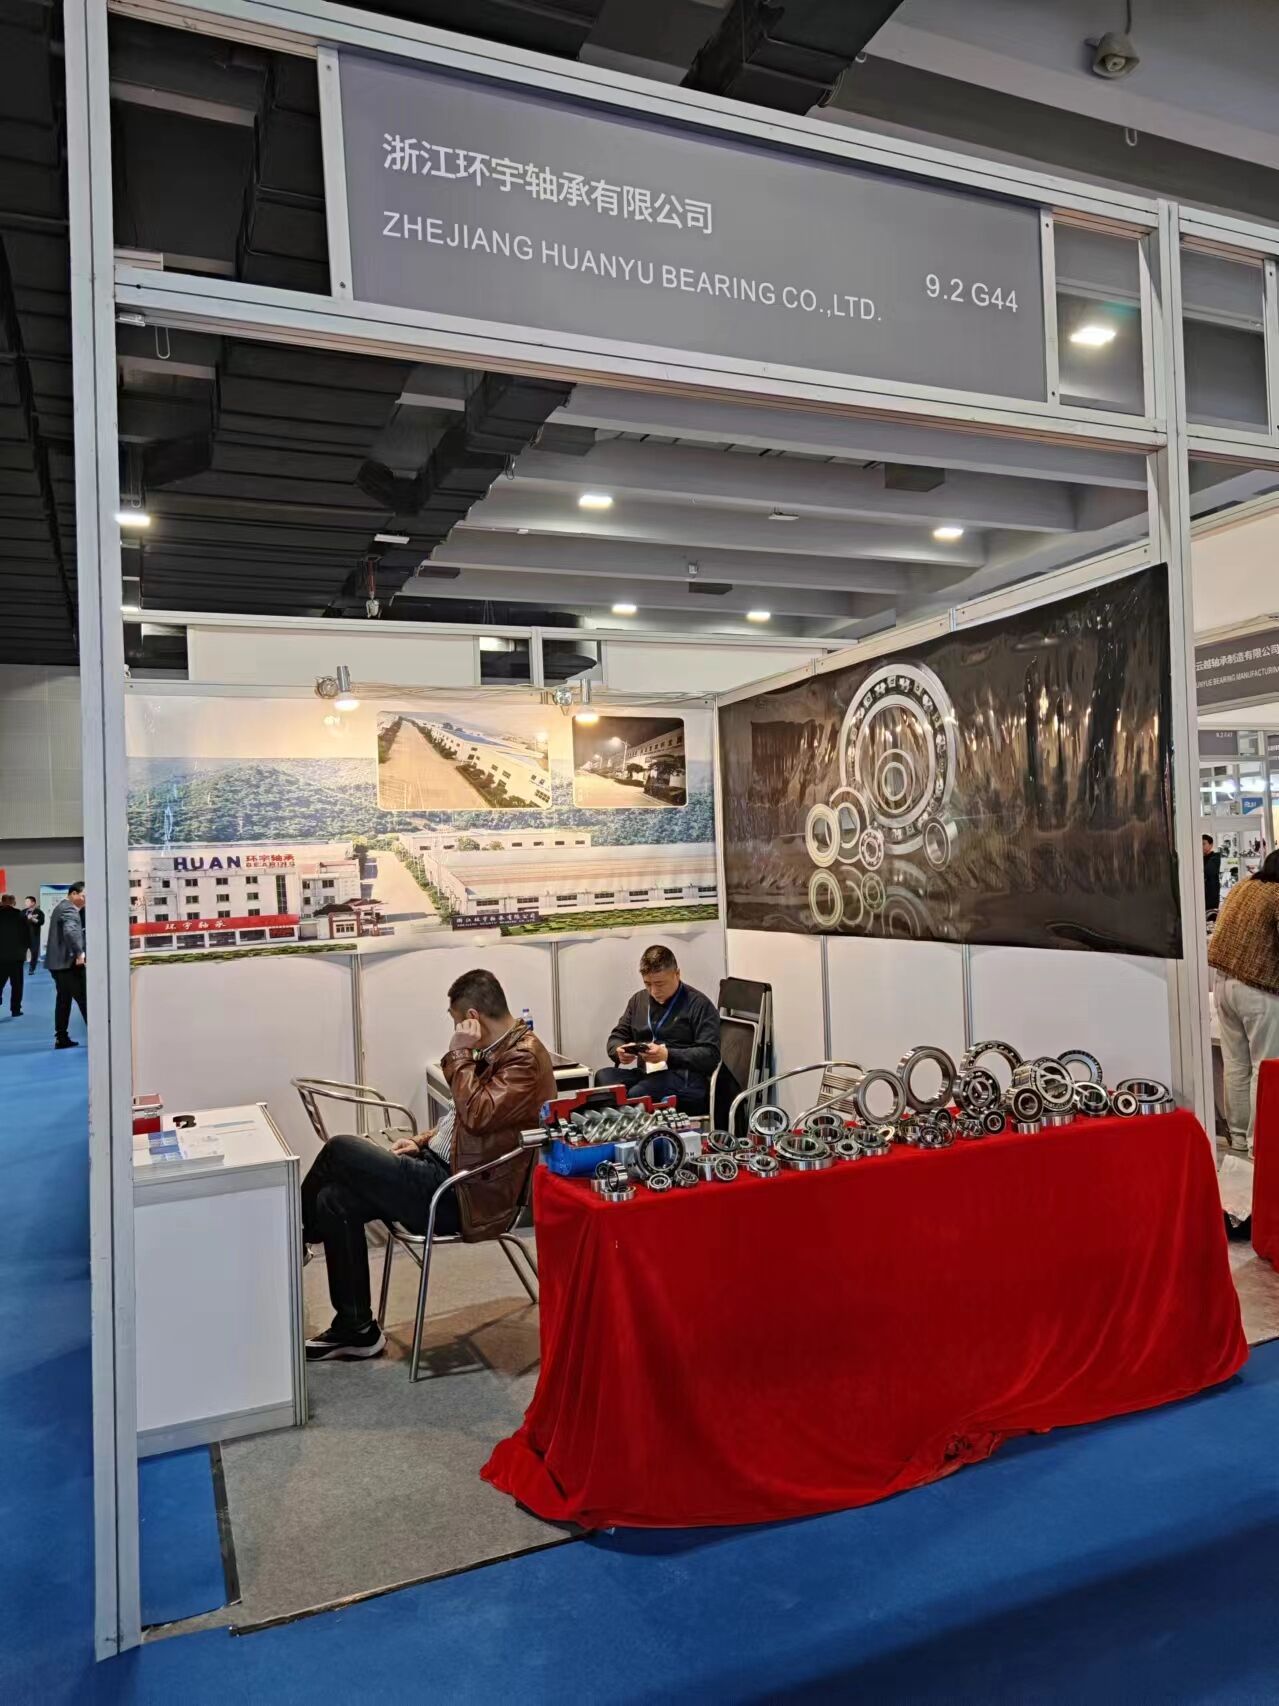 Zhejiang Huanyu Bearing Co., Ltd. successfully participated in the Guangzhou Industry Technology Exhibition